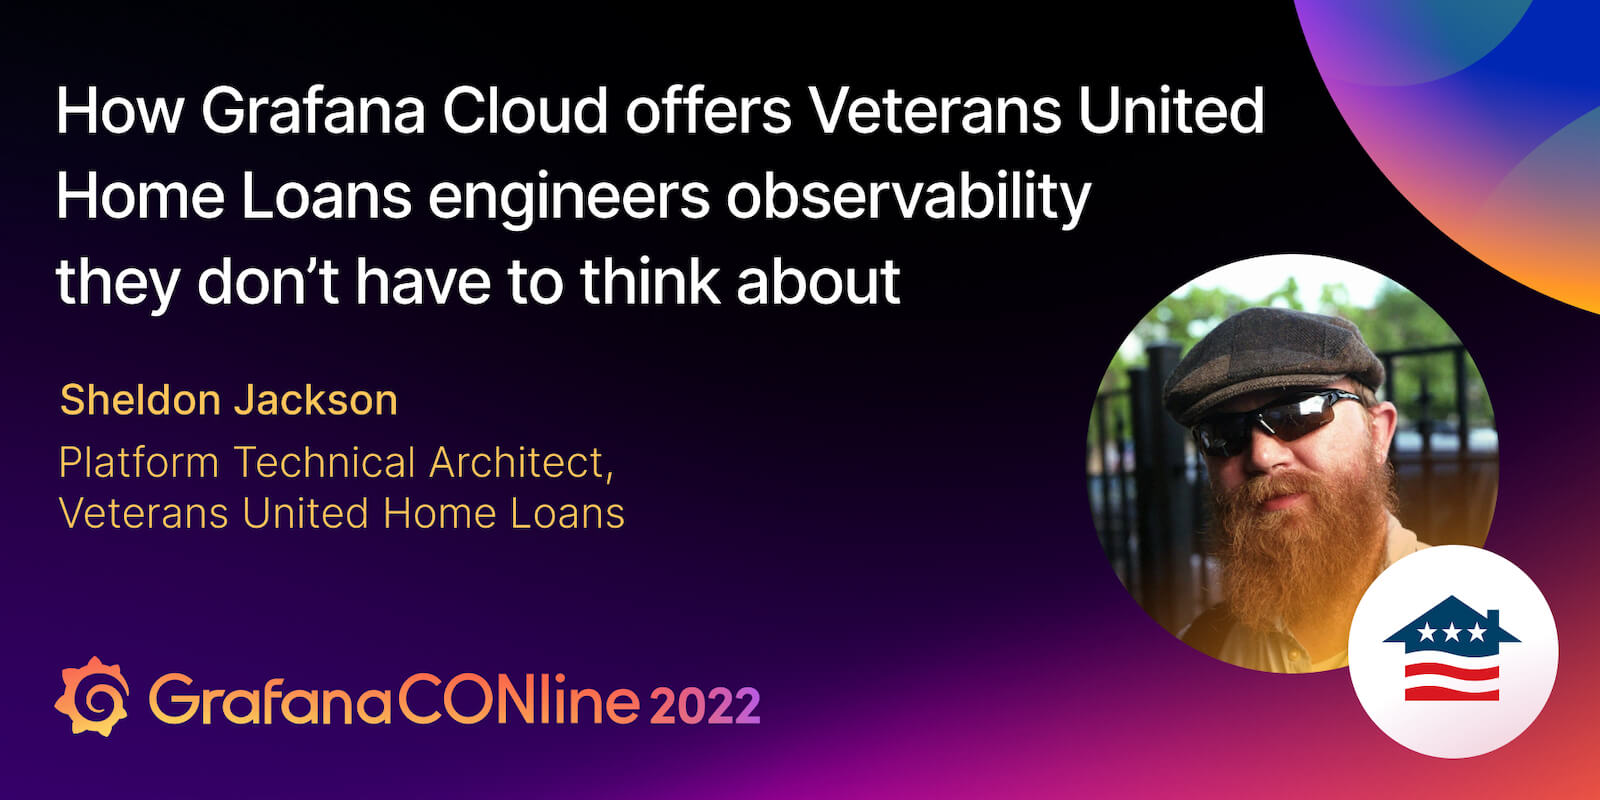 Grafana Cloud如何为退伍军人联合住房贷款工程师提供他们不必考虑的可观察性